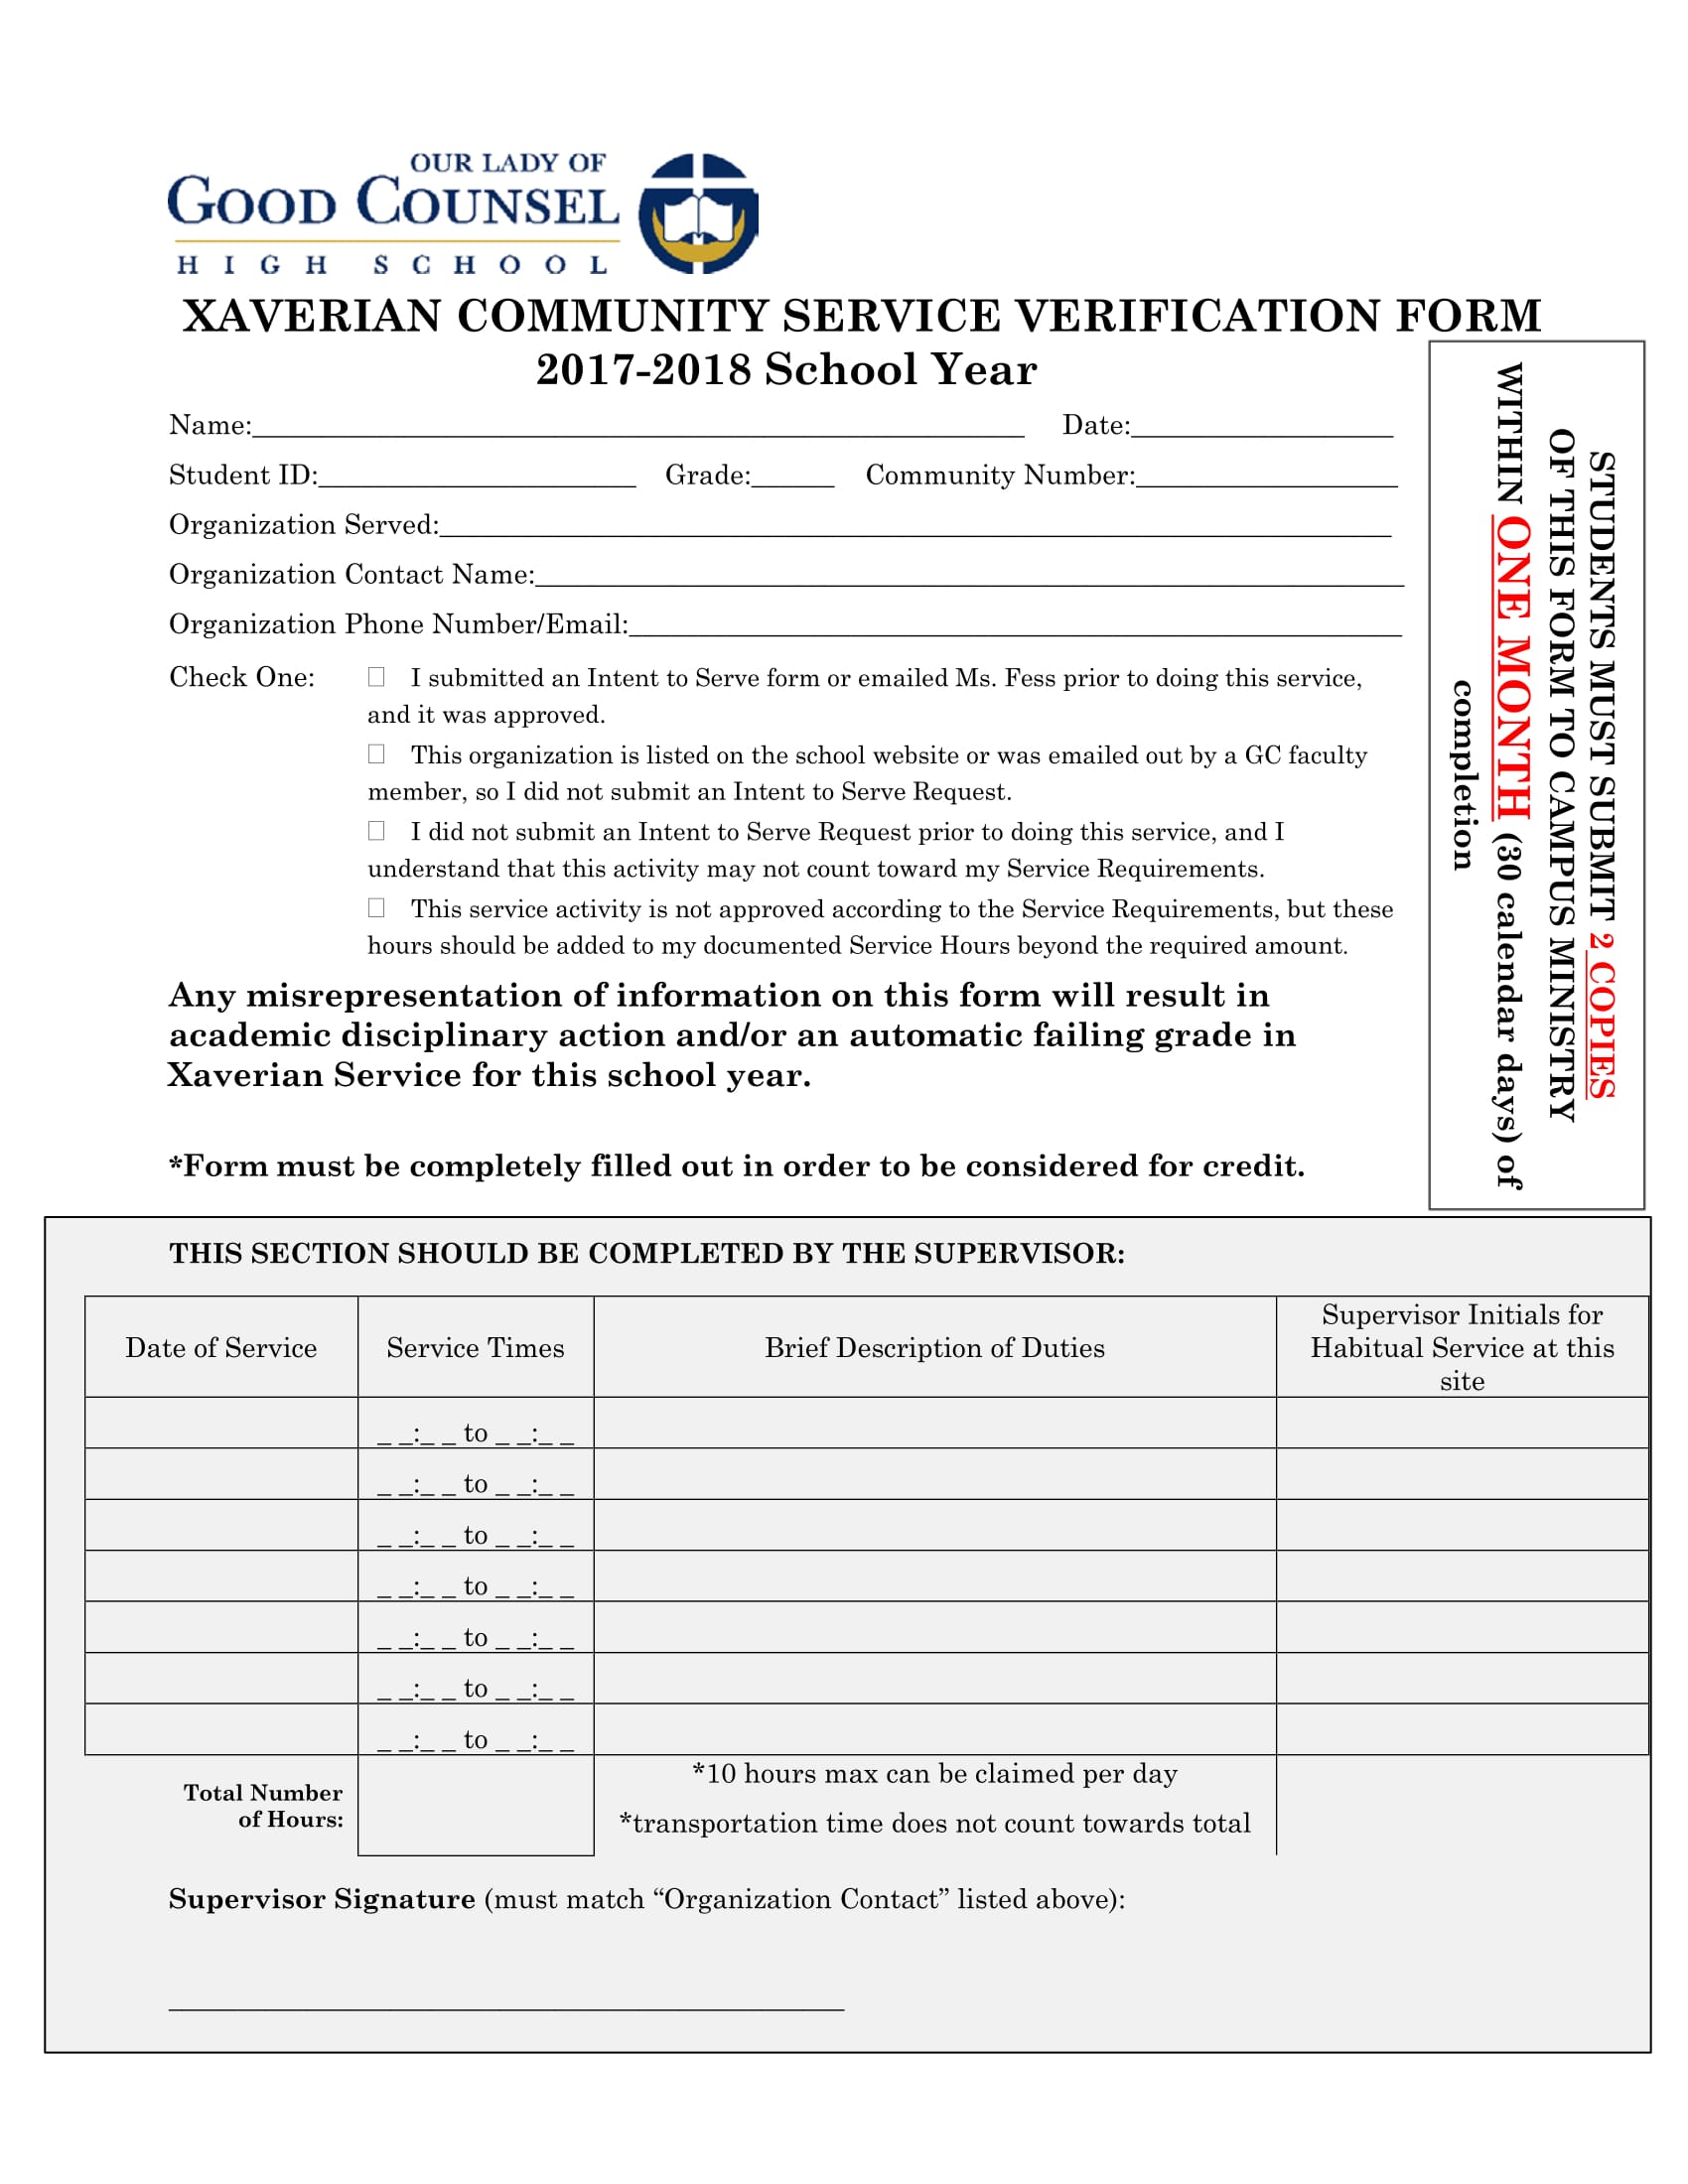 community service verification form 1